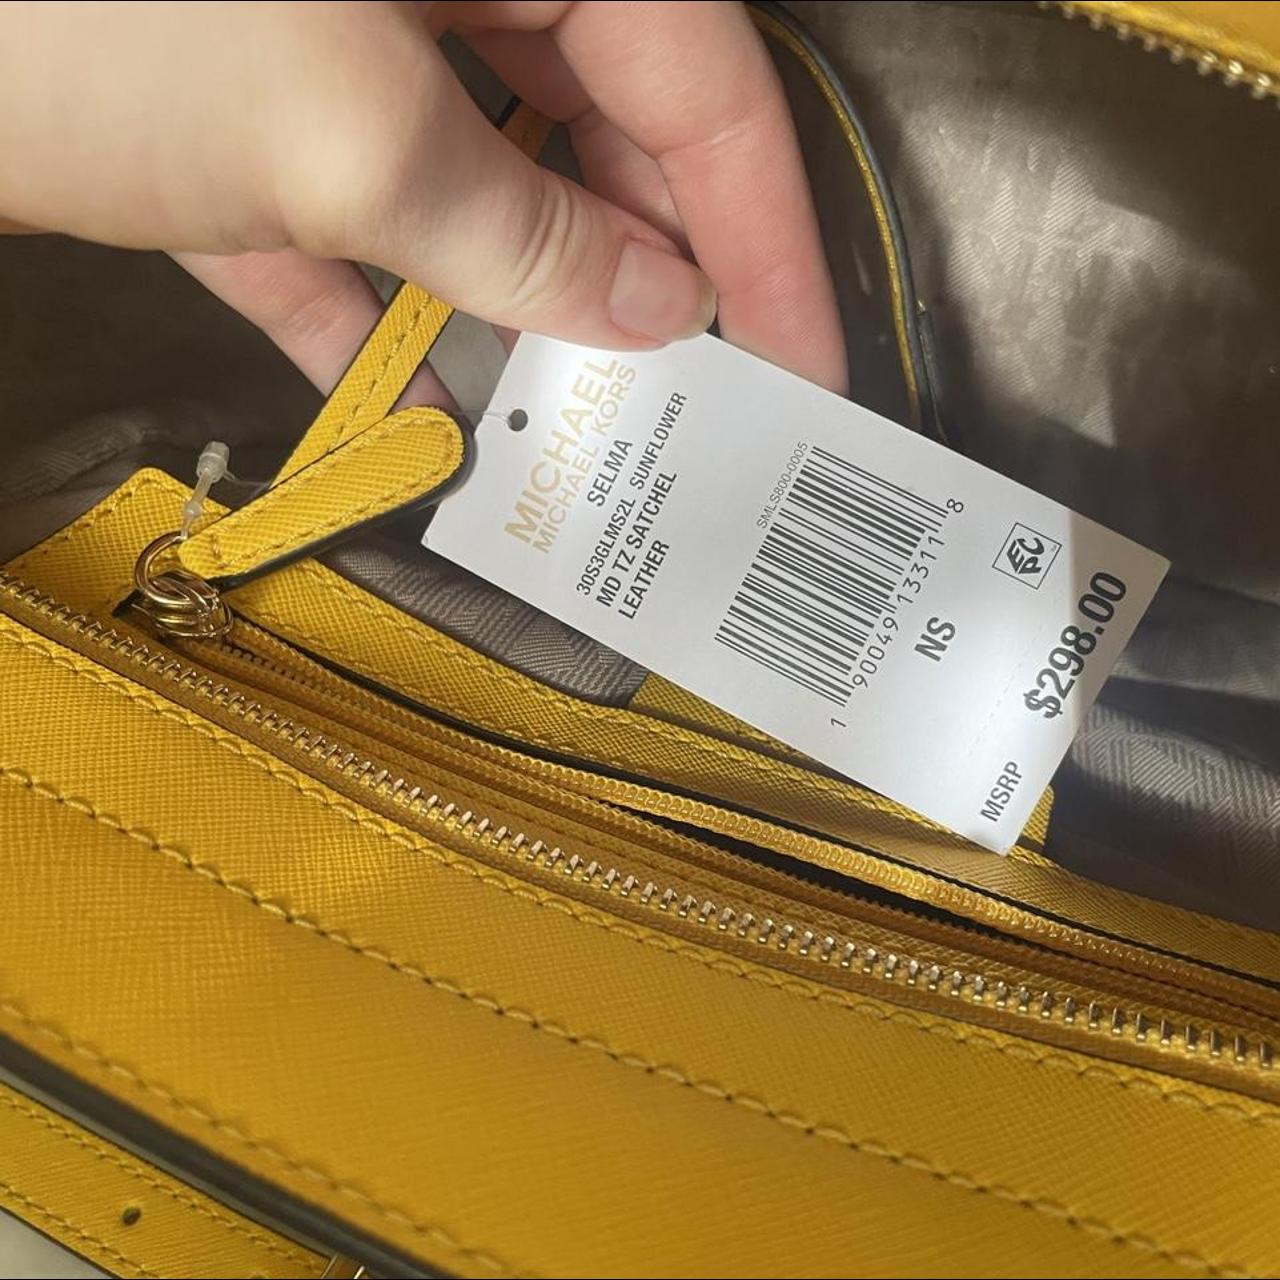 Michael Kors Jet Set Saffiano Leather Chain Large Shoulder Tote Bag yellow   Michael Kors bag  087303566860  Fash Brands